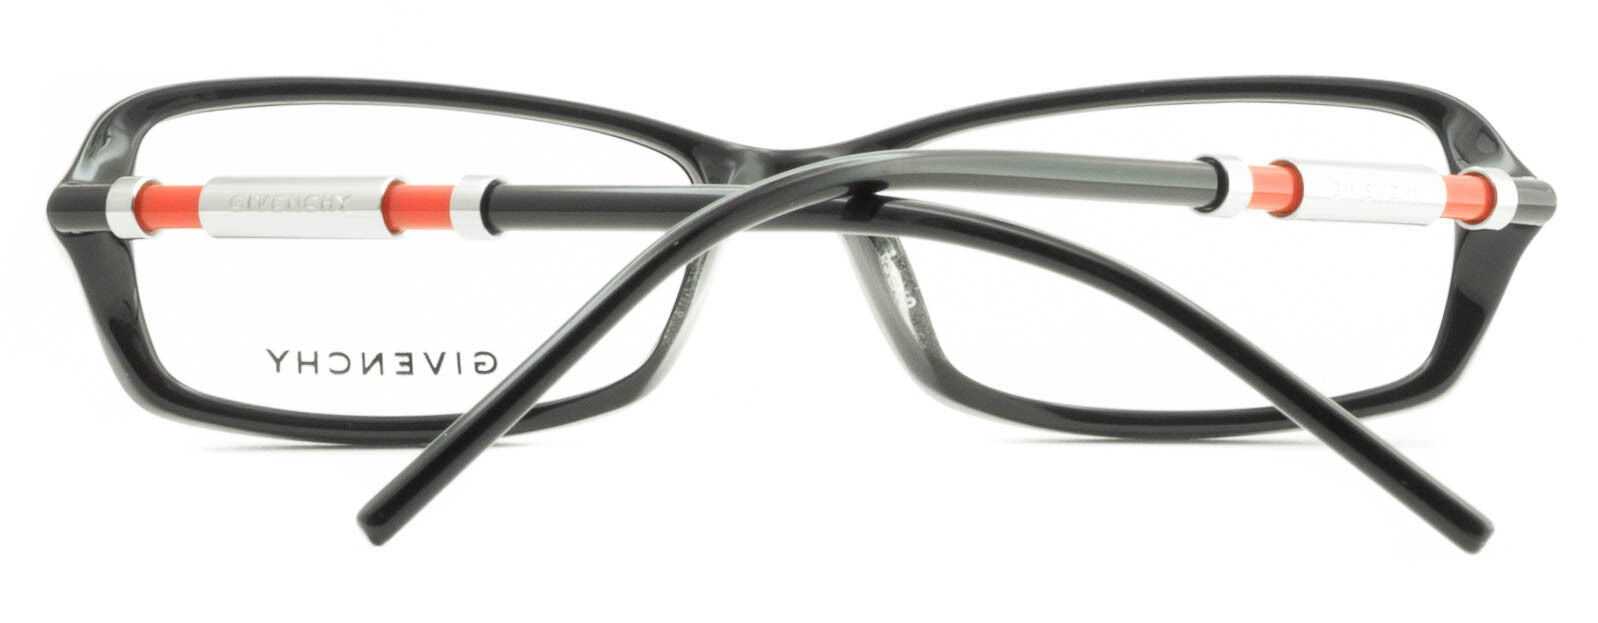 GIVENCHY VGV 805 COL 700X 53mm Eyewear FRAMES RX Optical Glasses Eyeglasses -New